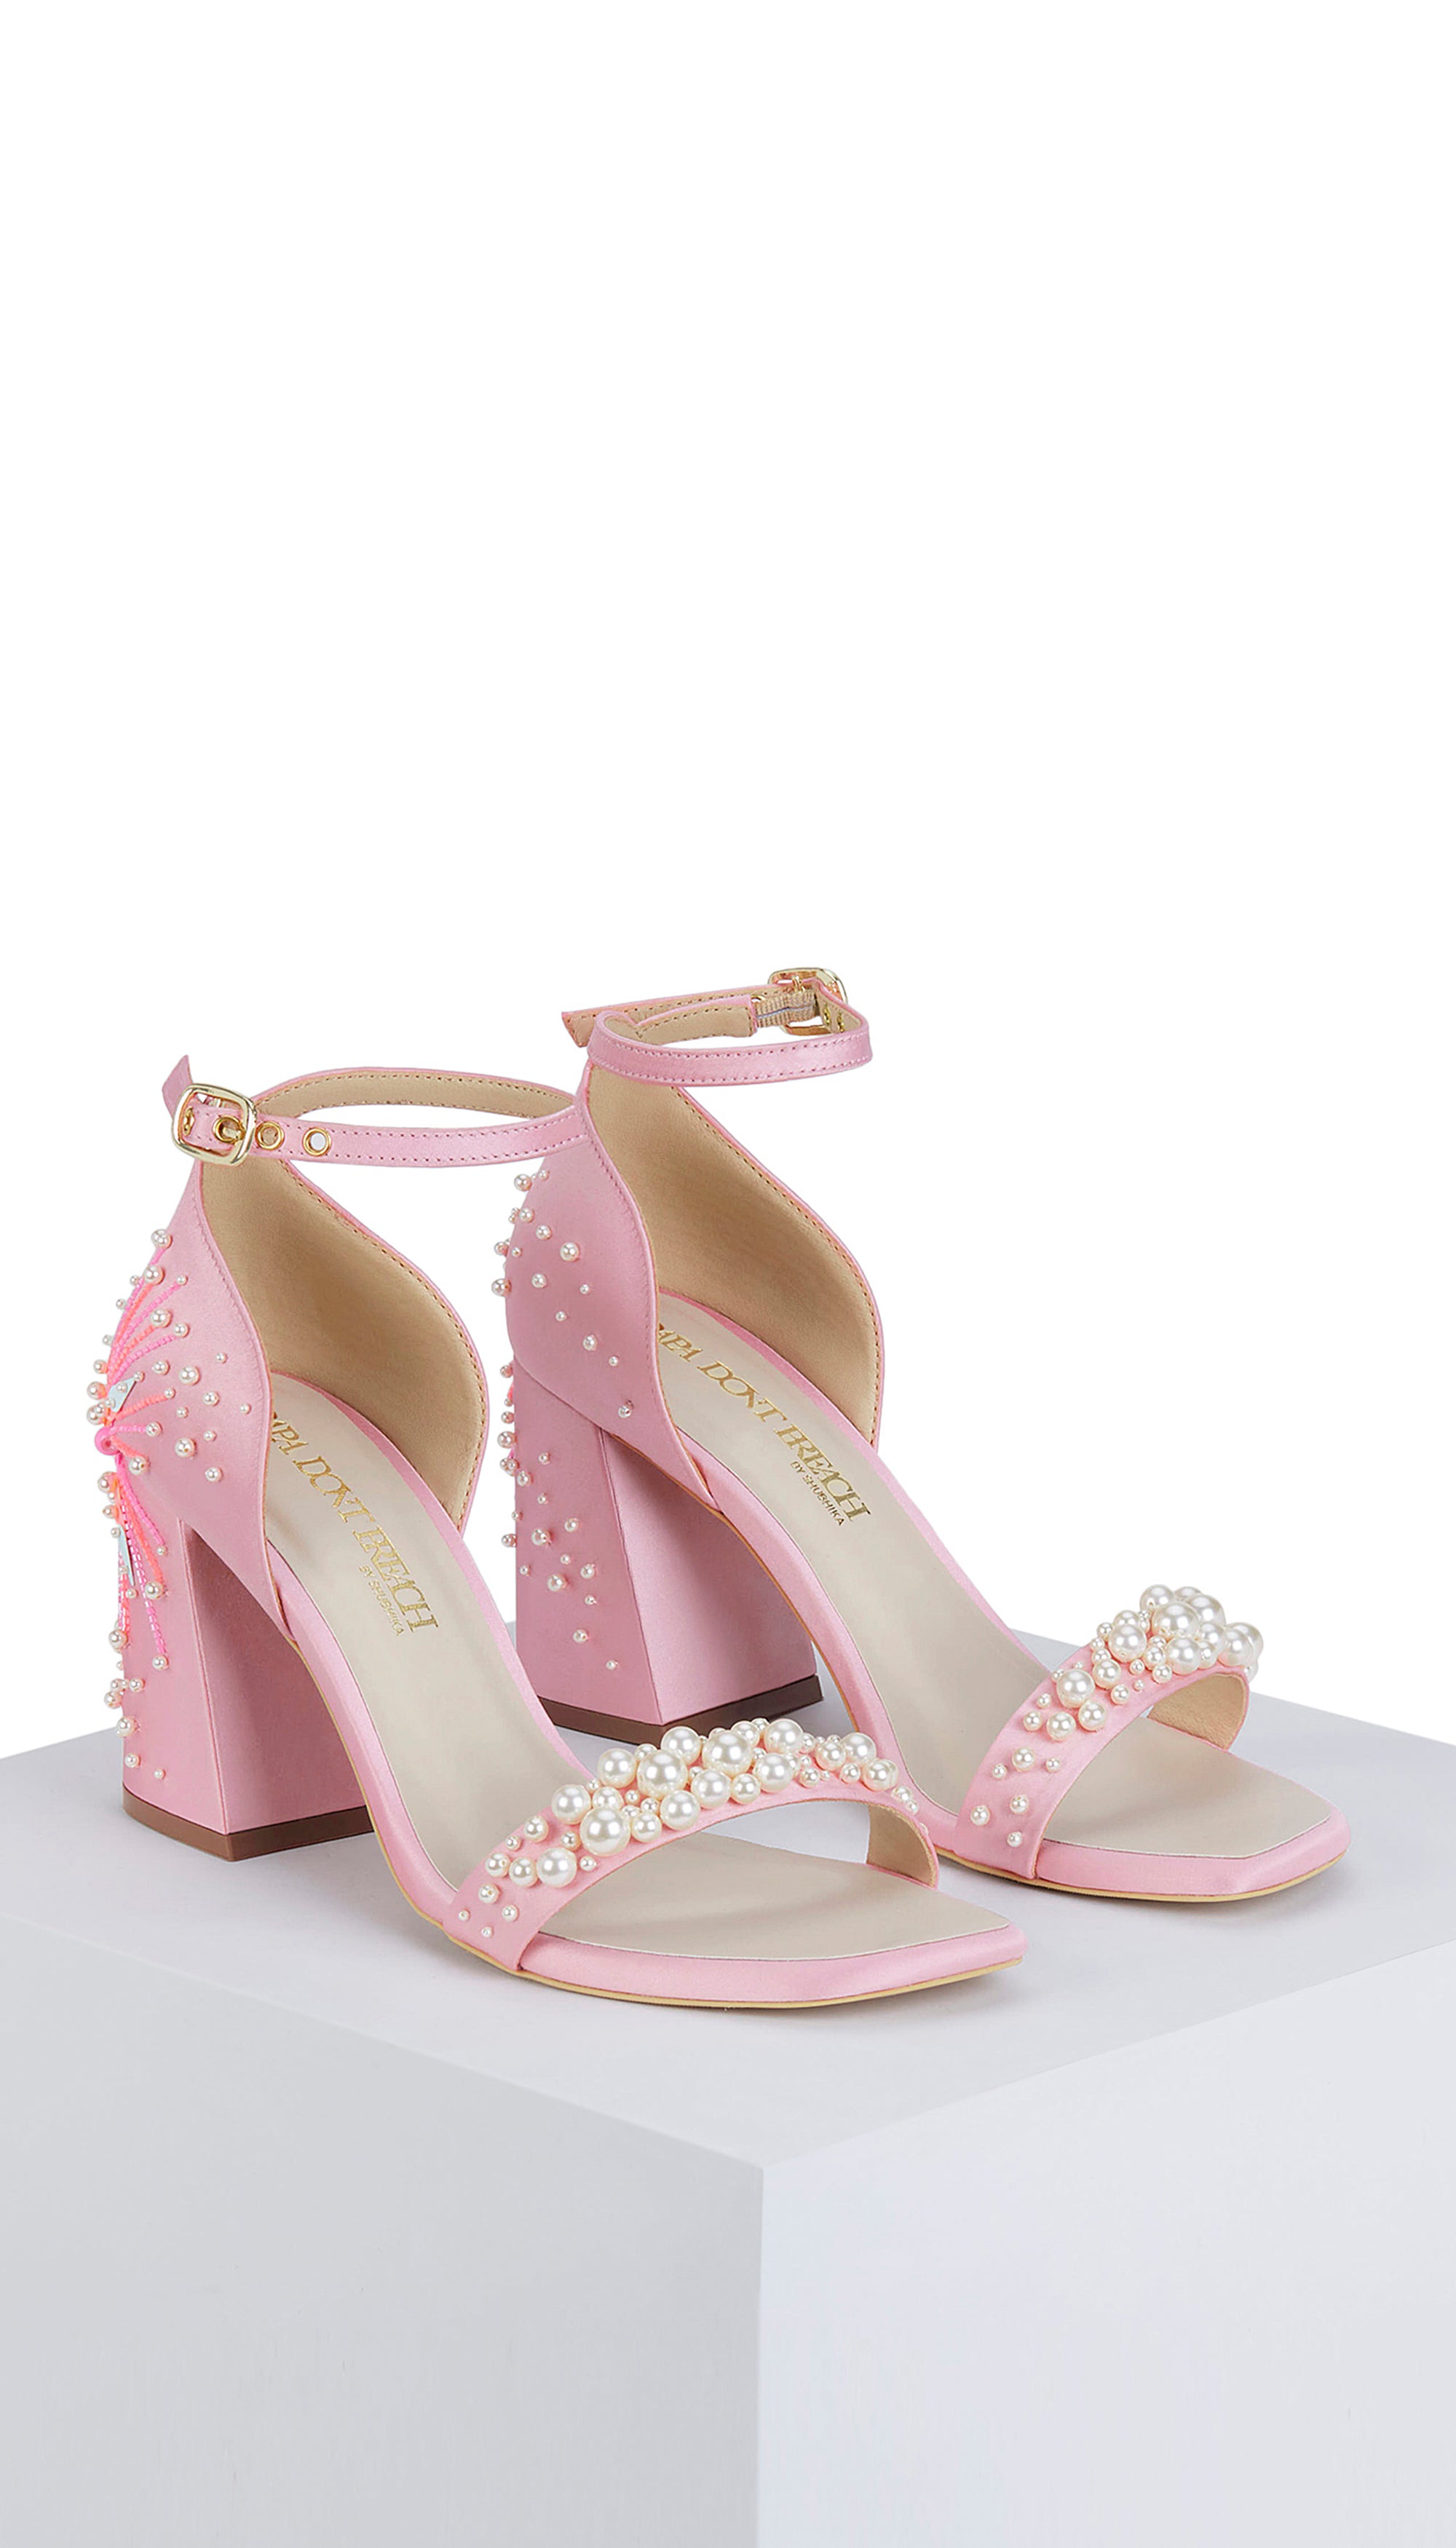 BETSEY JOHNSON Hot Pink Satin CELESTT Rhinestone Bow Peep Toe Heels Sz 8.5  $130 | eBay